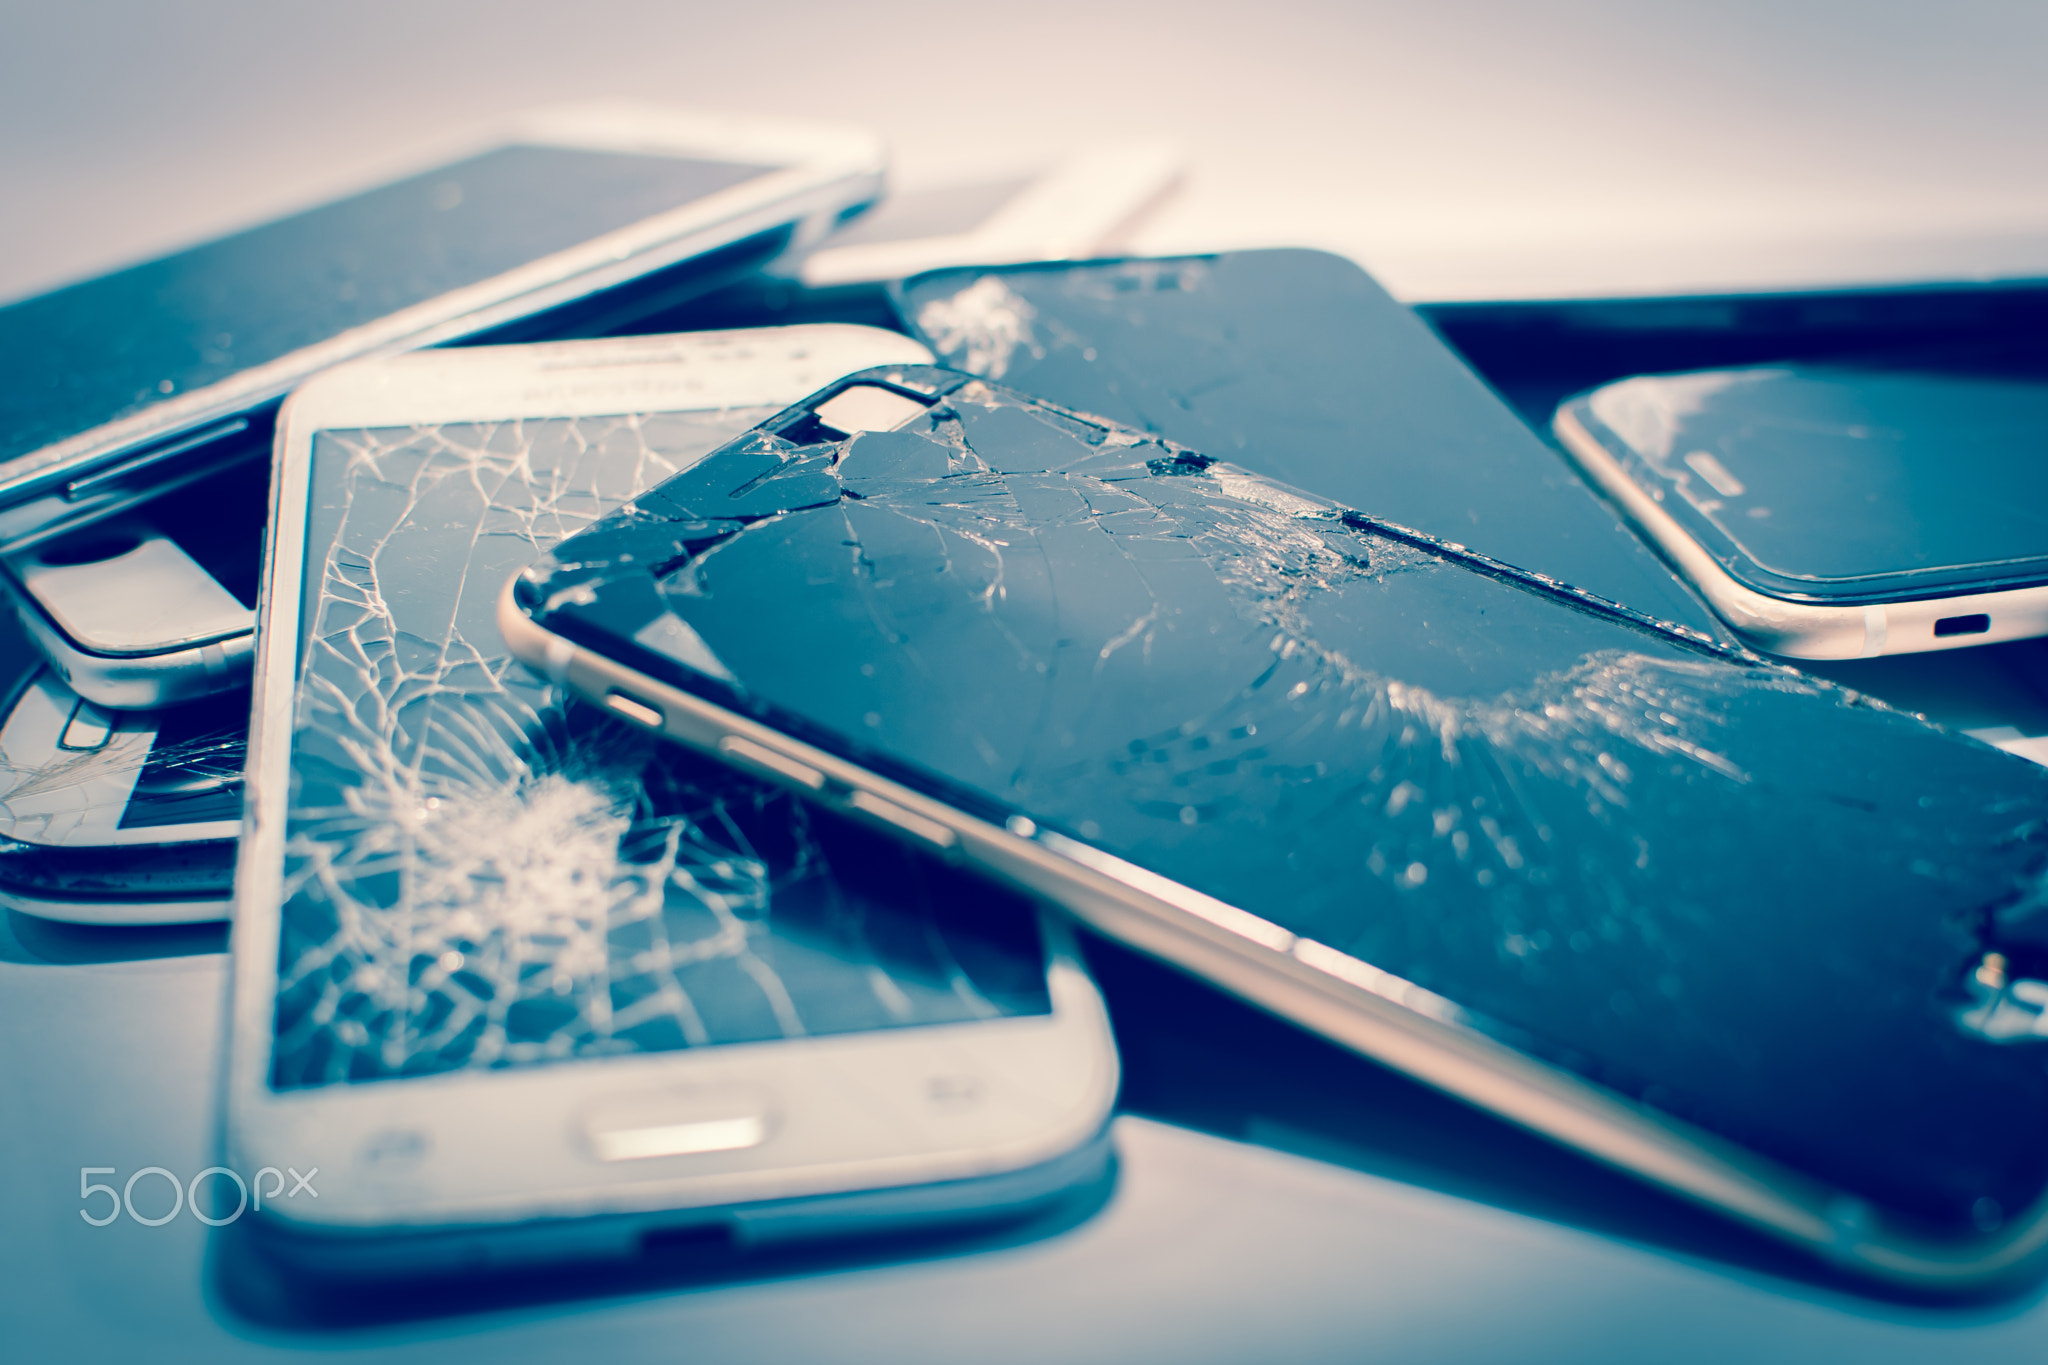 Damaged smartphone